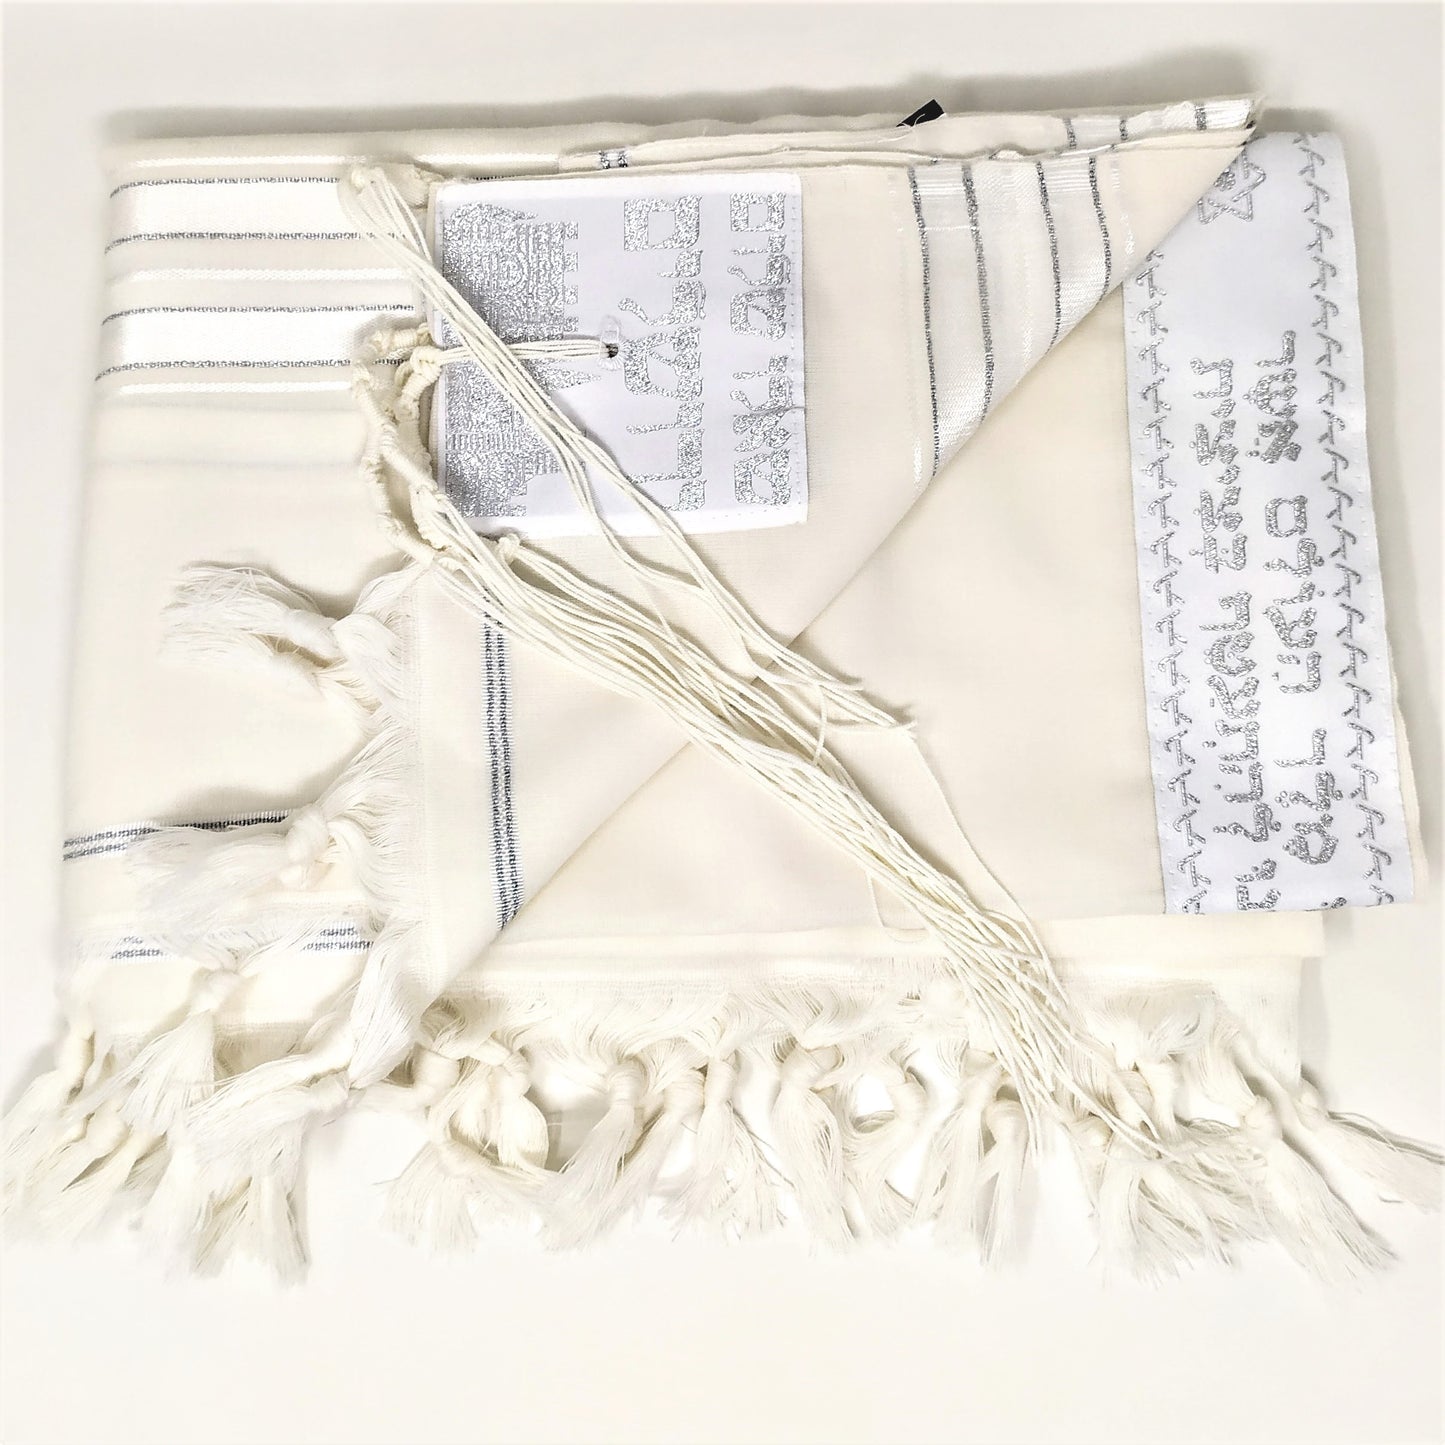 Talit de lana talla 55 blanco con franjas plateadas talitania 11251